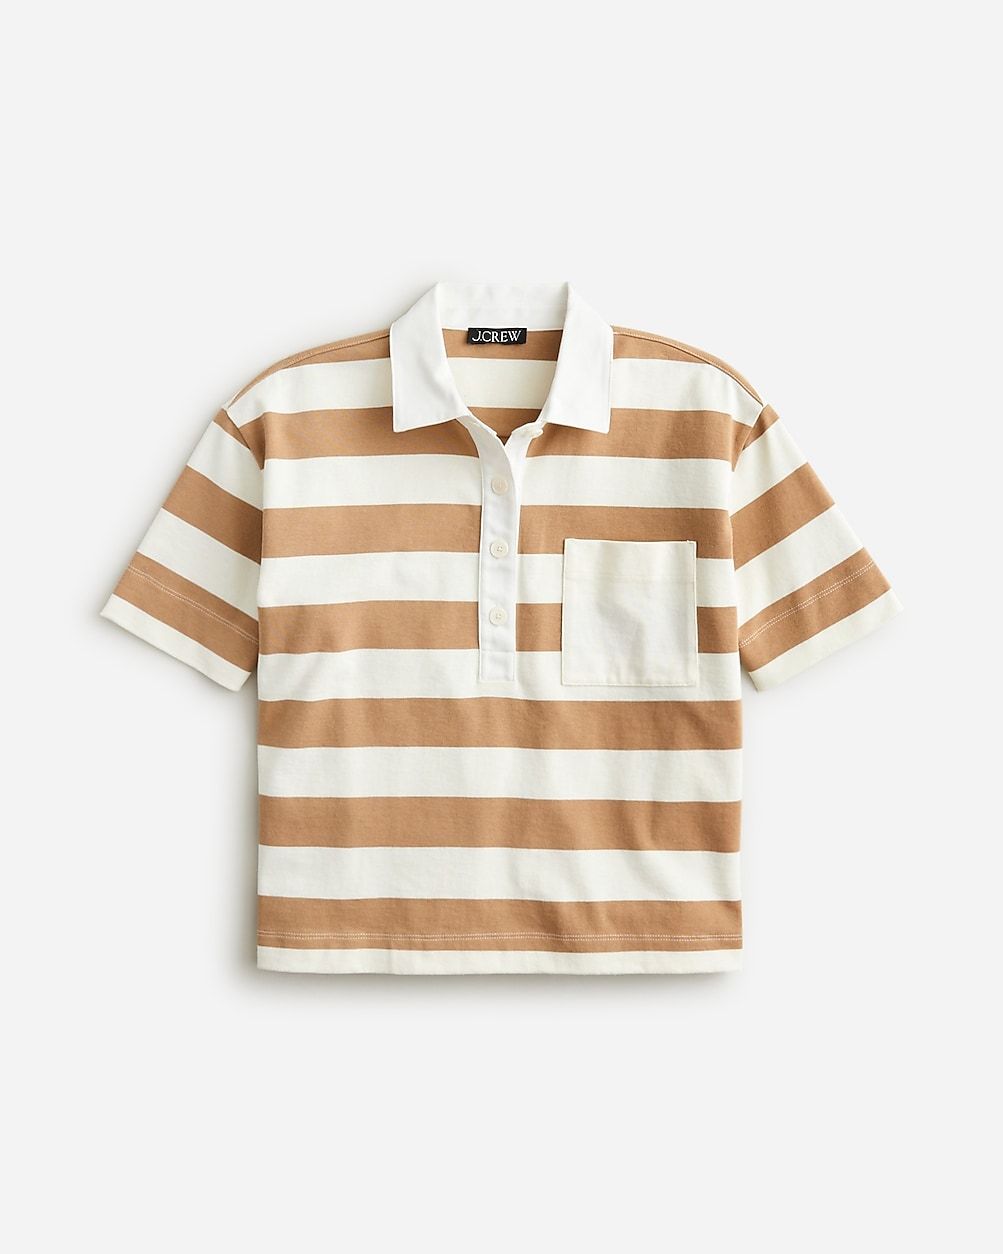 Polo T-shirt in stripe mariner cotton | J.Crew US